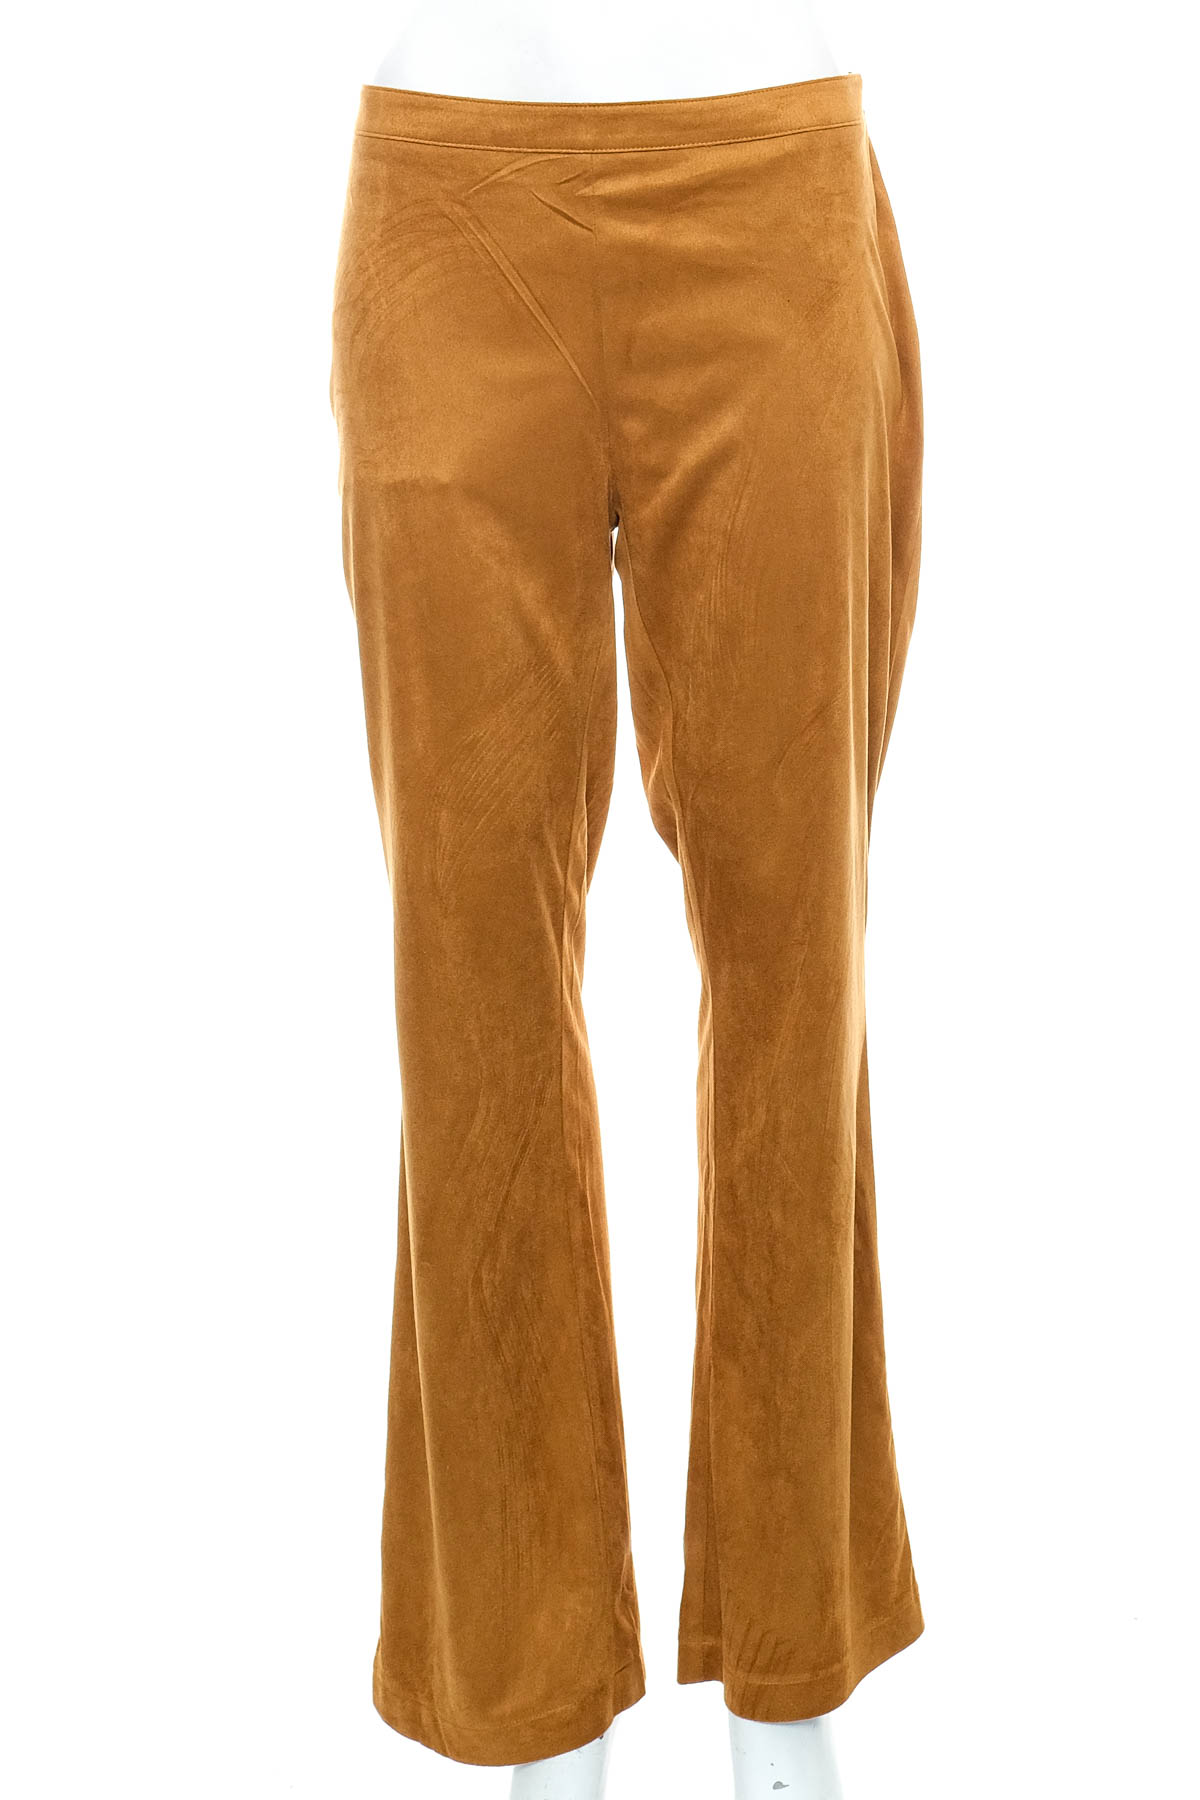 Women's trousers - Aniston - 0